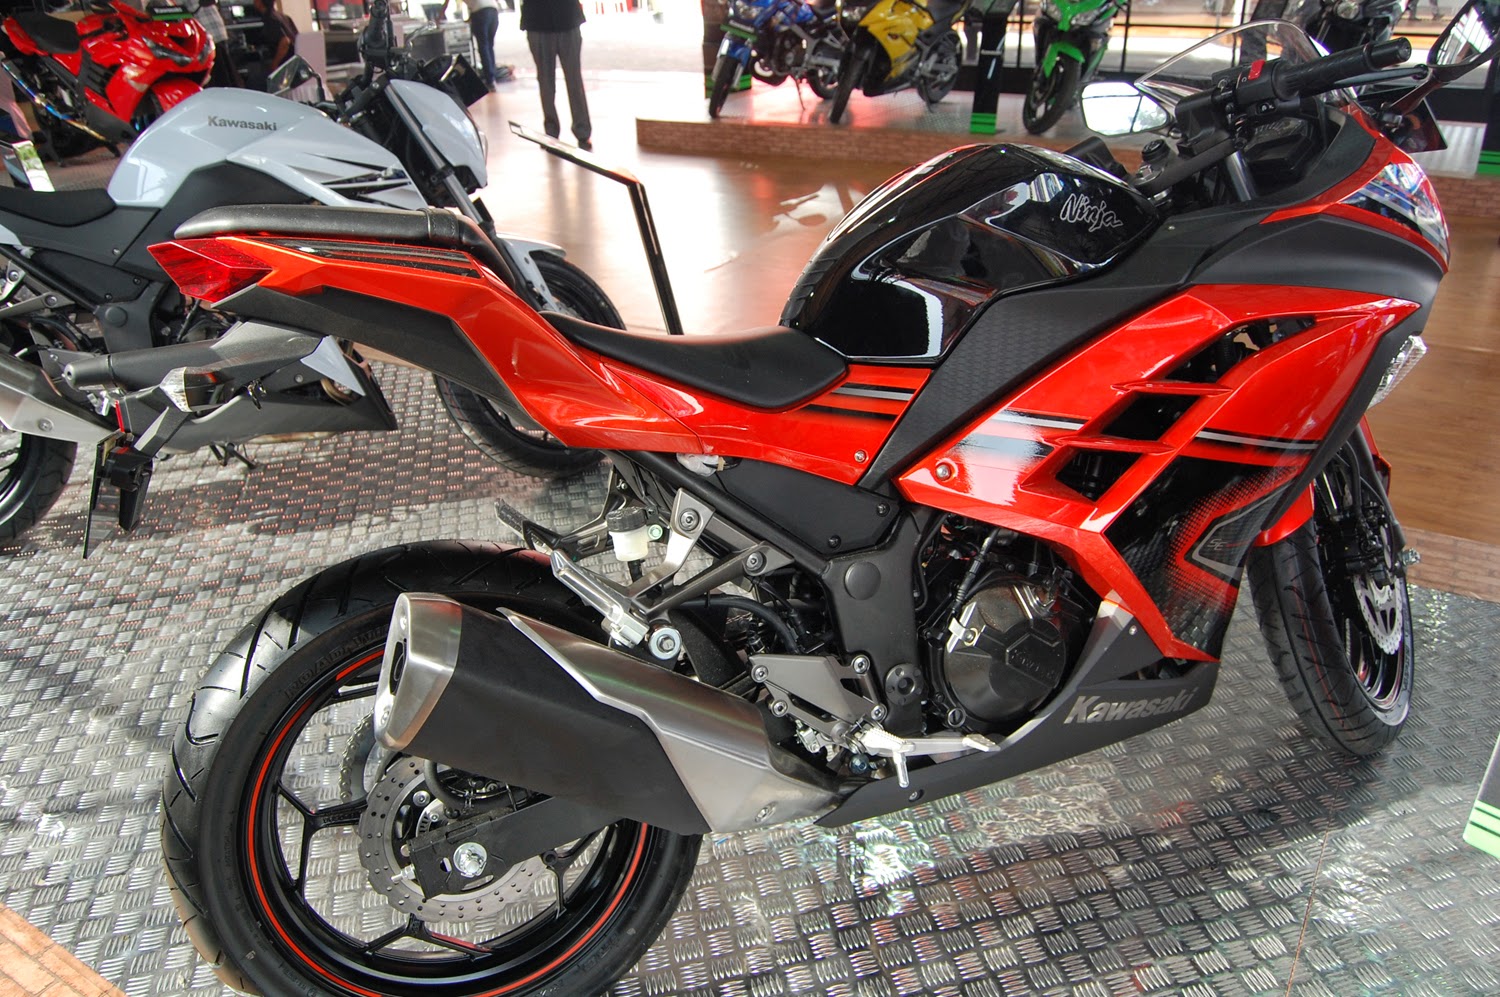 Kawasaki Ninja 250 Fi Modifikasi Terbaru Thecitycyclist